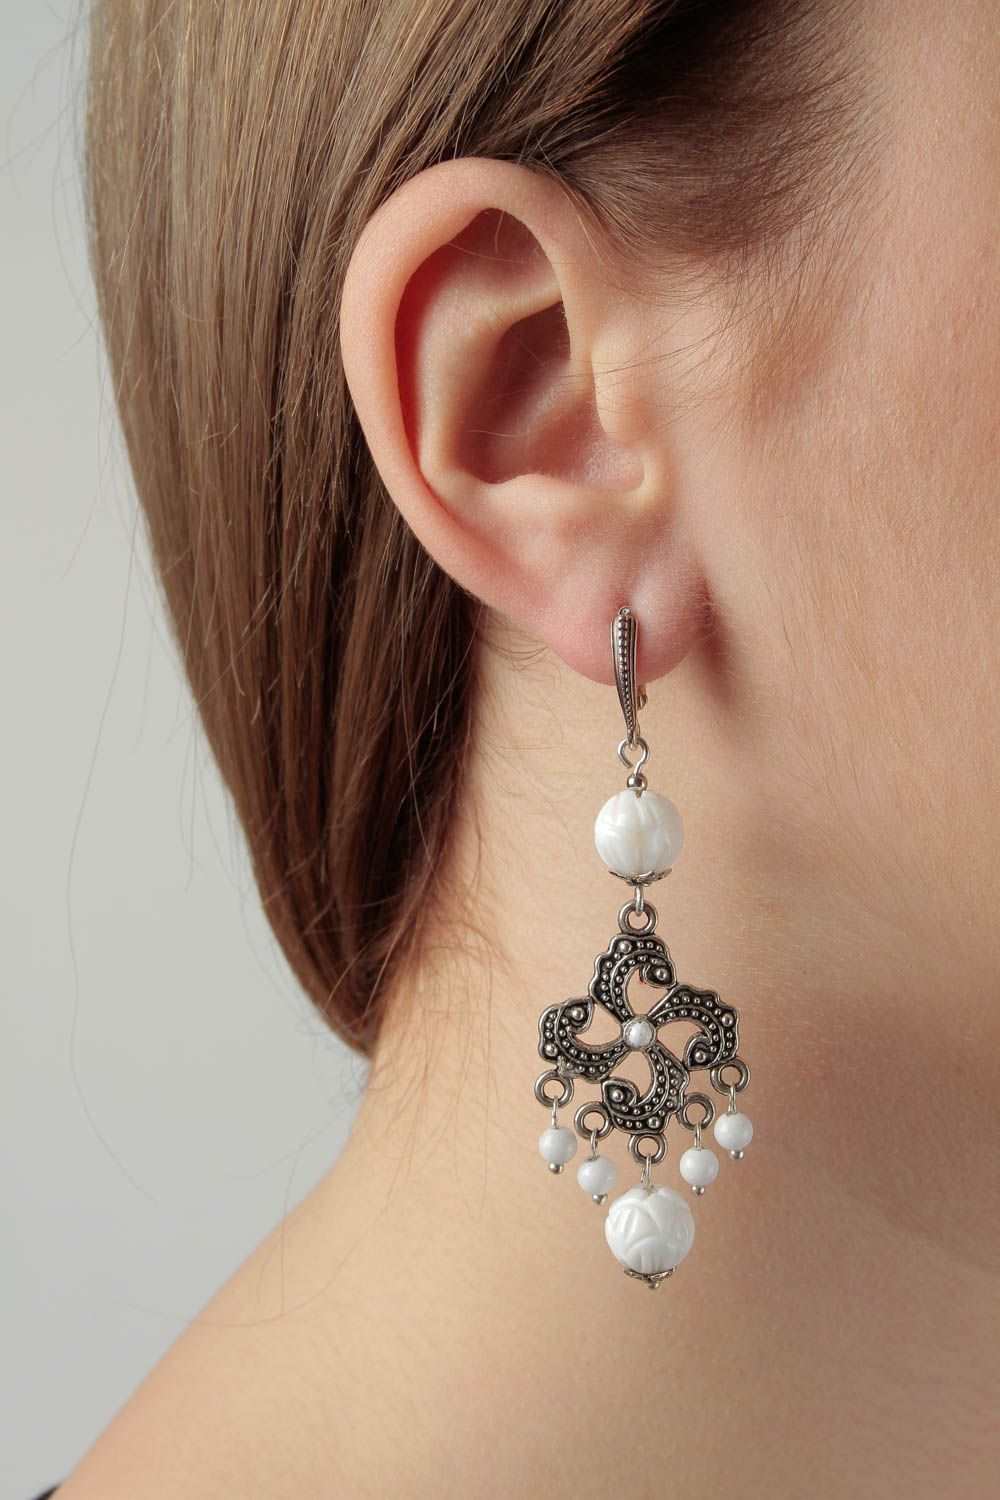 Handmade earrings with natural stone elegant evening earrings designer jewelry photo 1